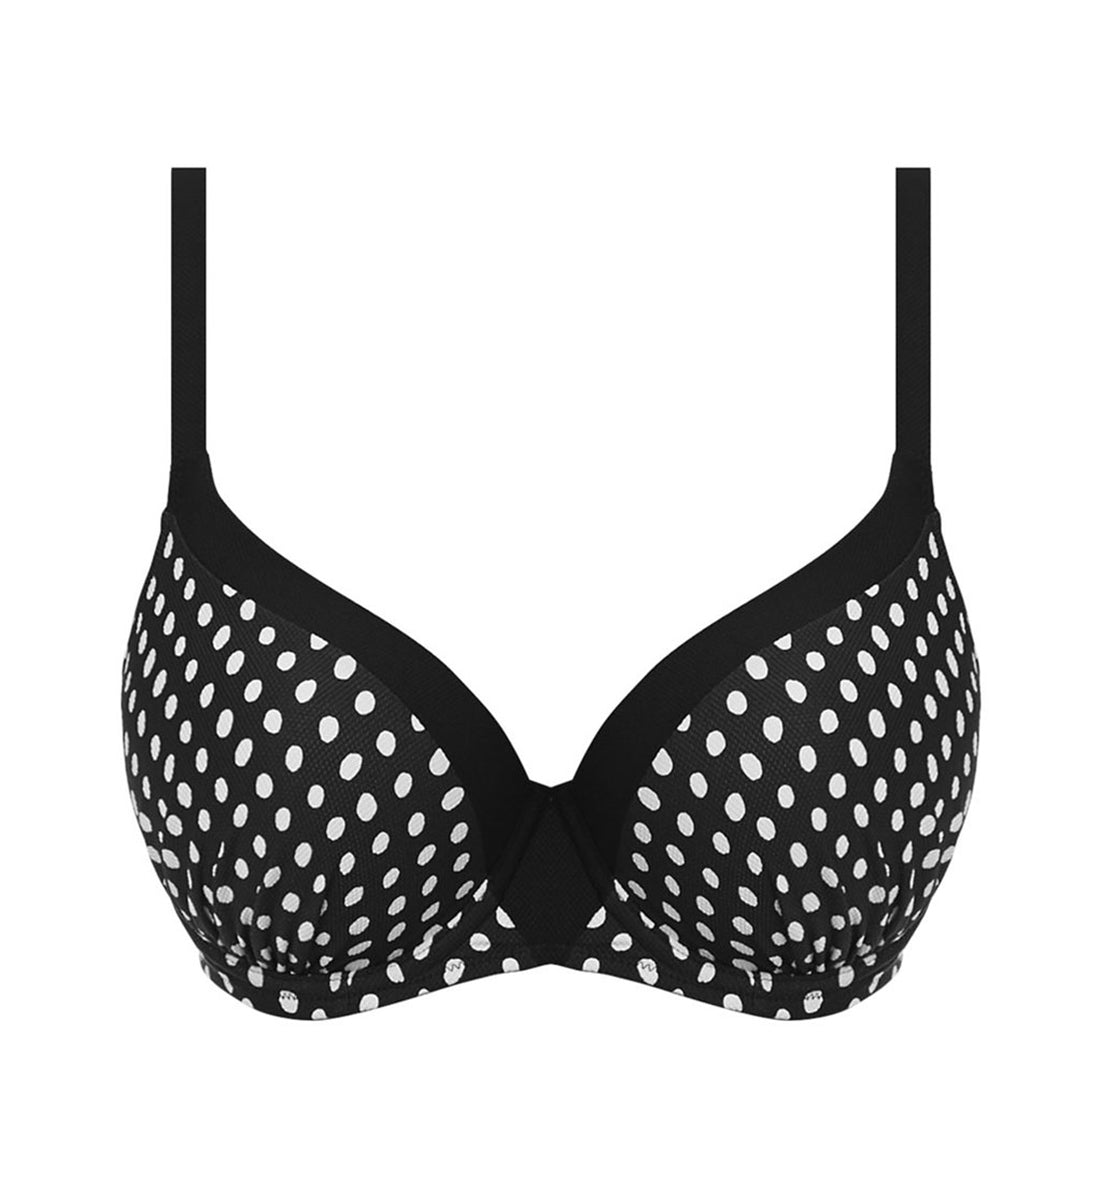 Fantasie Santa Monica Molded Underwire Bikini Top (6721),30D,Black/White - Black/White,30D